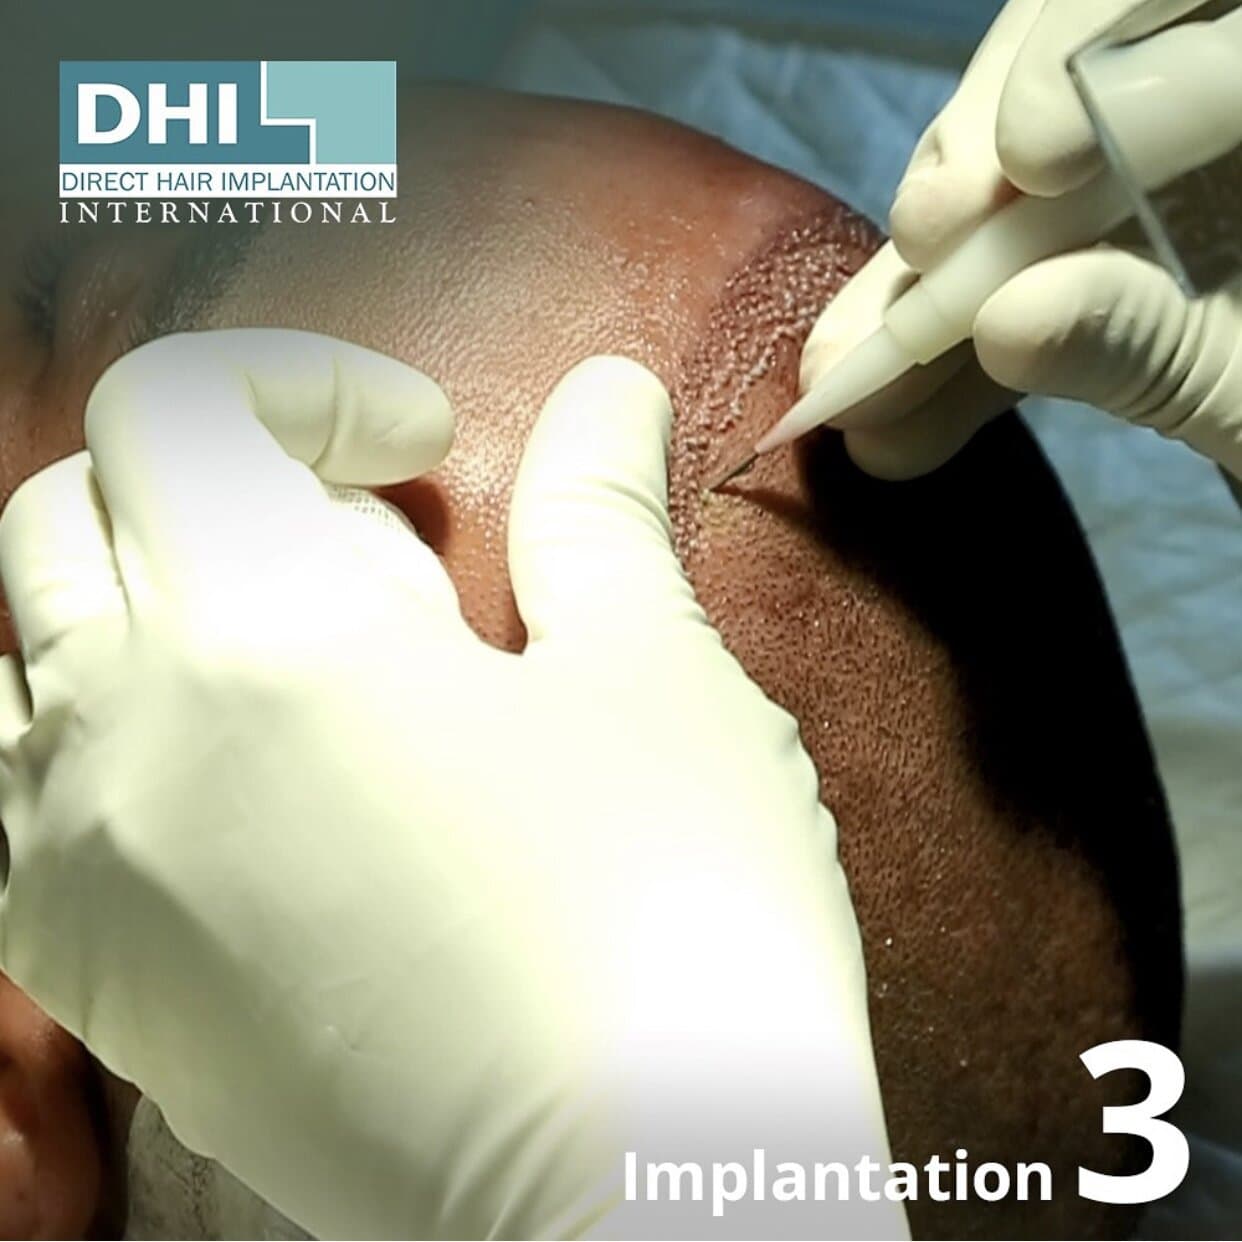 dhi hair transplant process 3 implantation